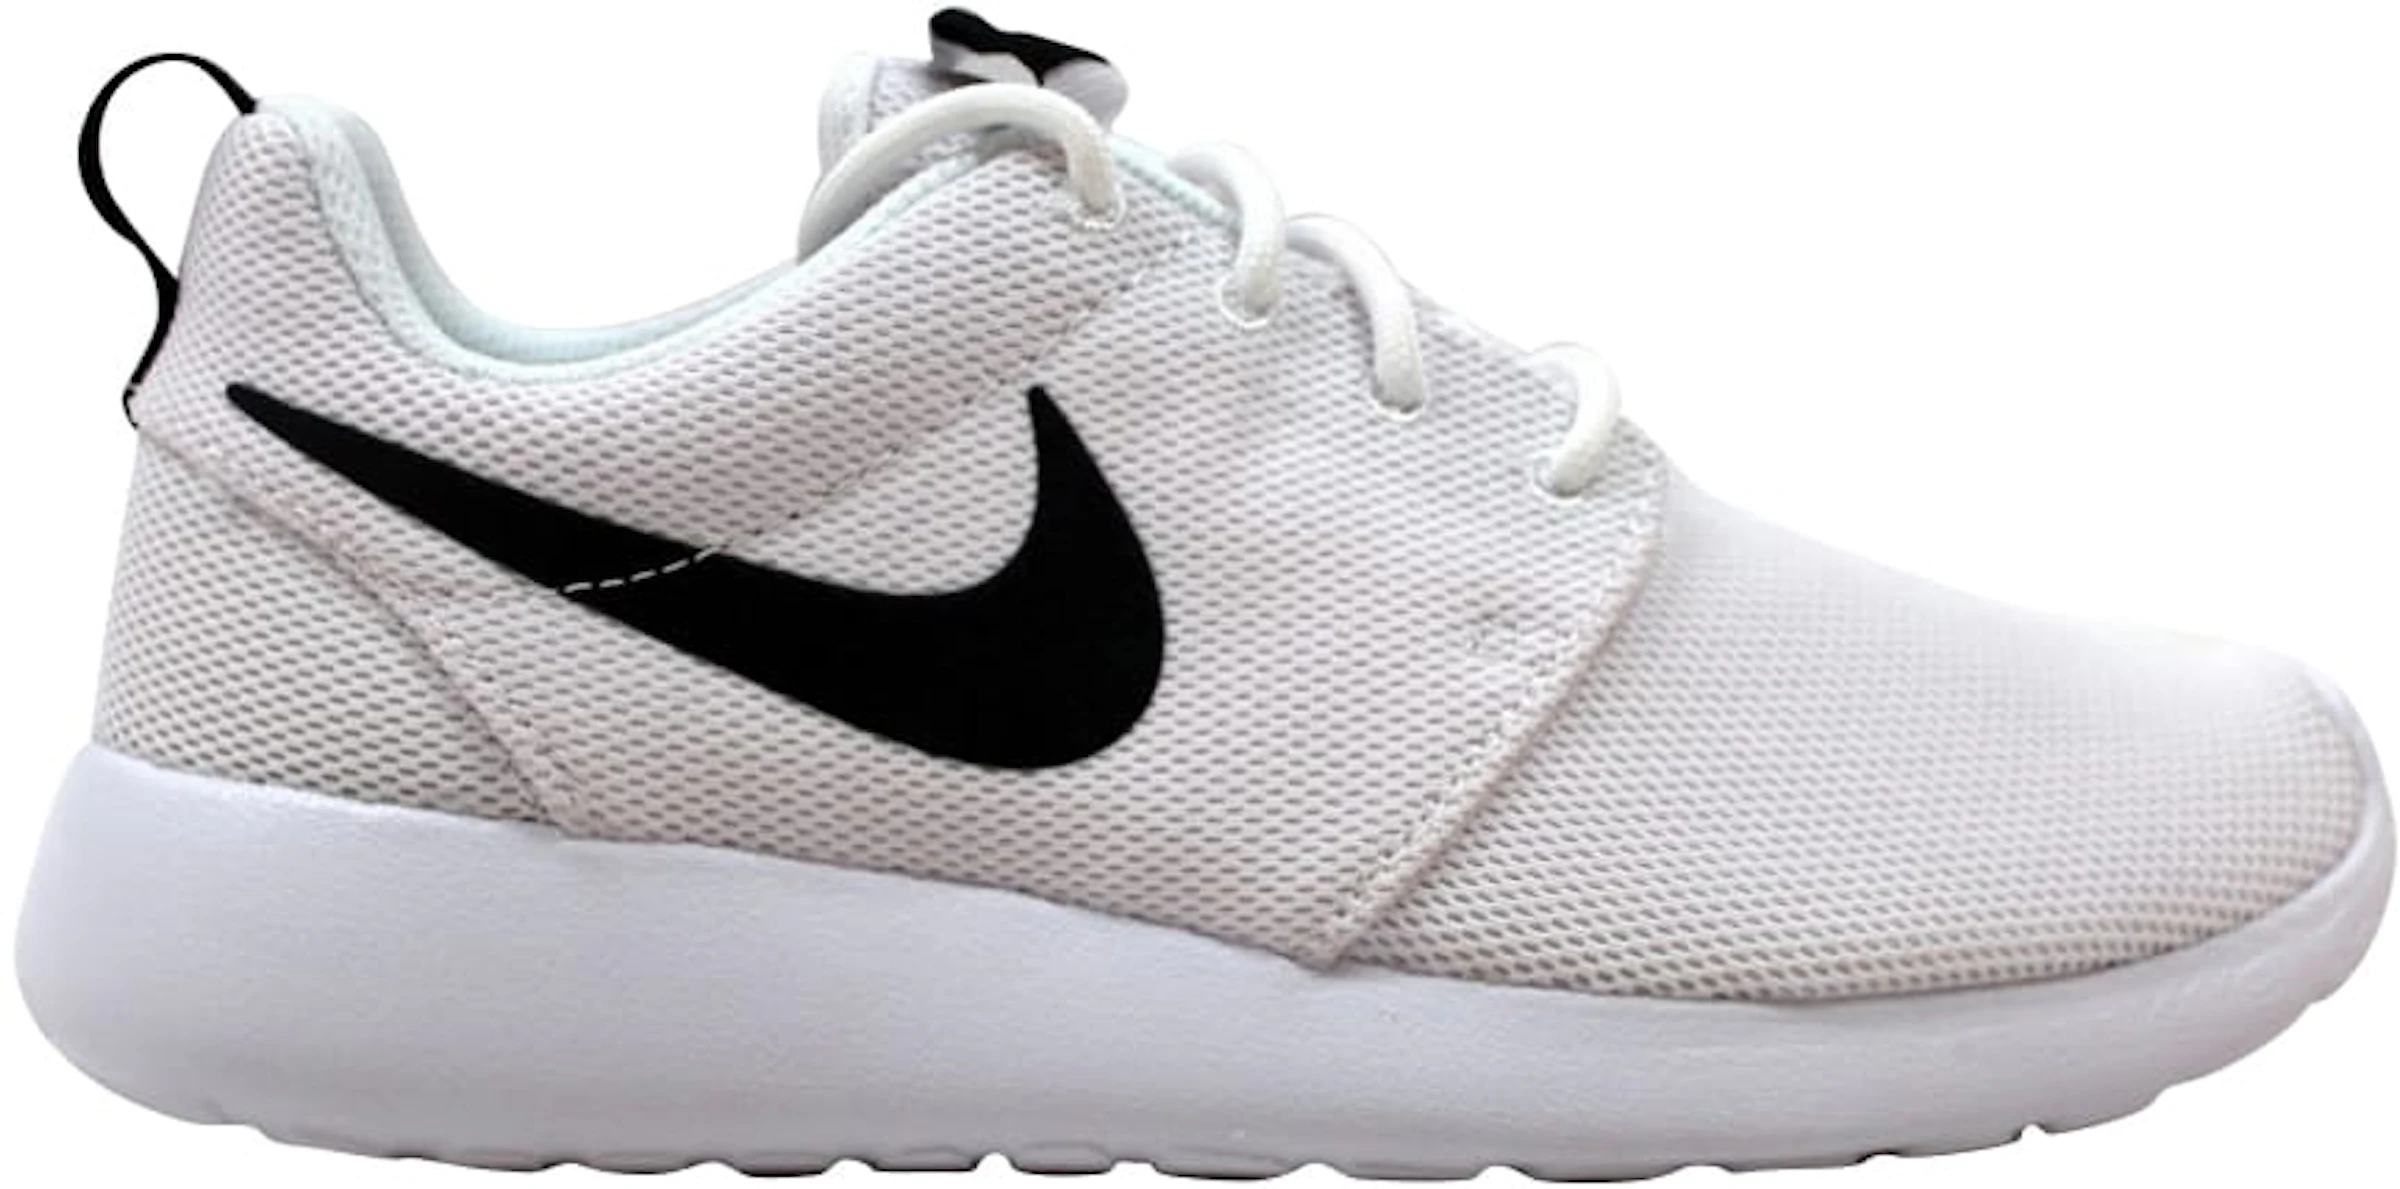 Nike Roshe One White/White-Black (W) - 844994-101 -